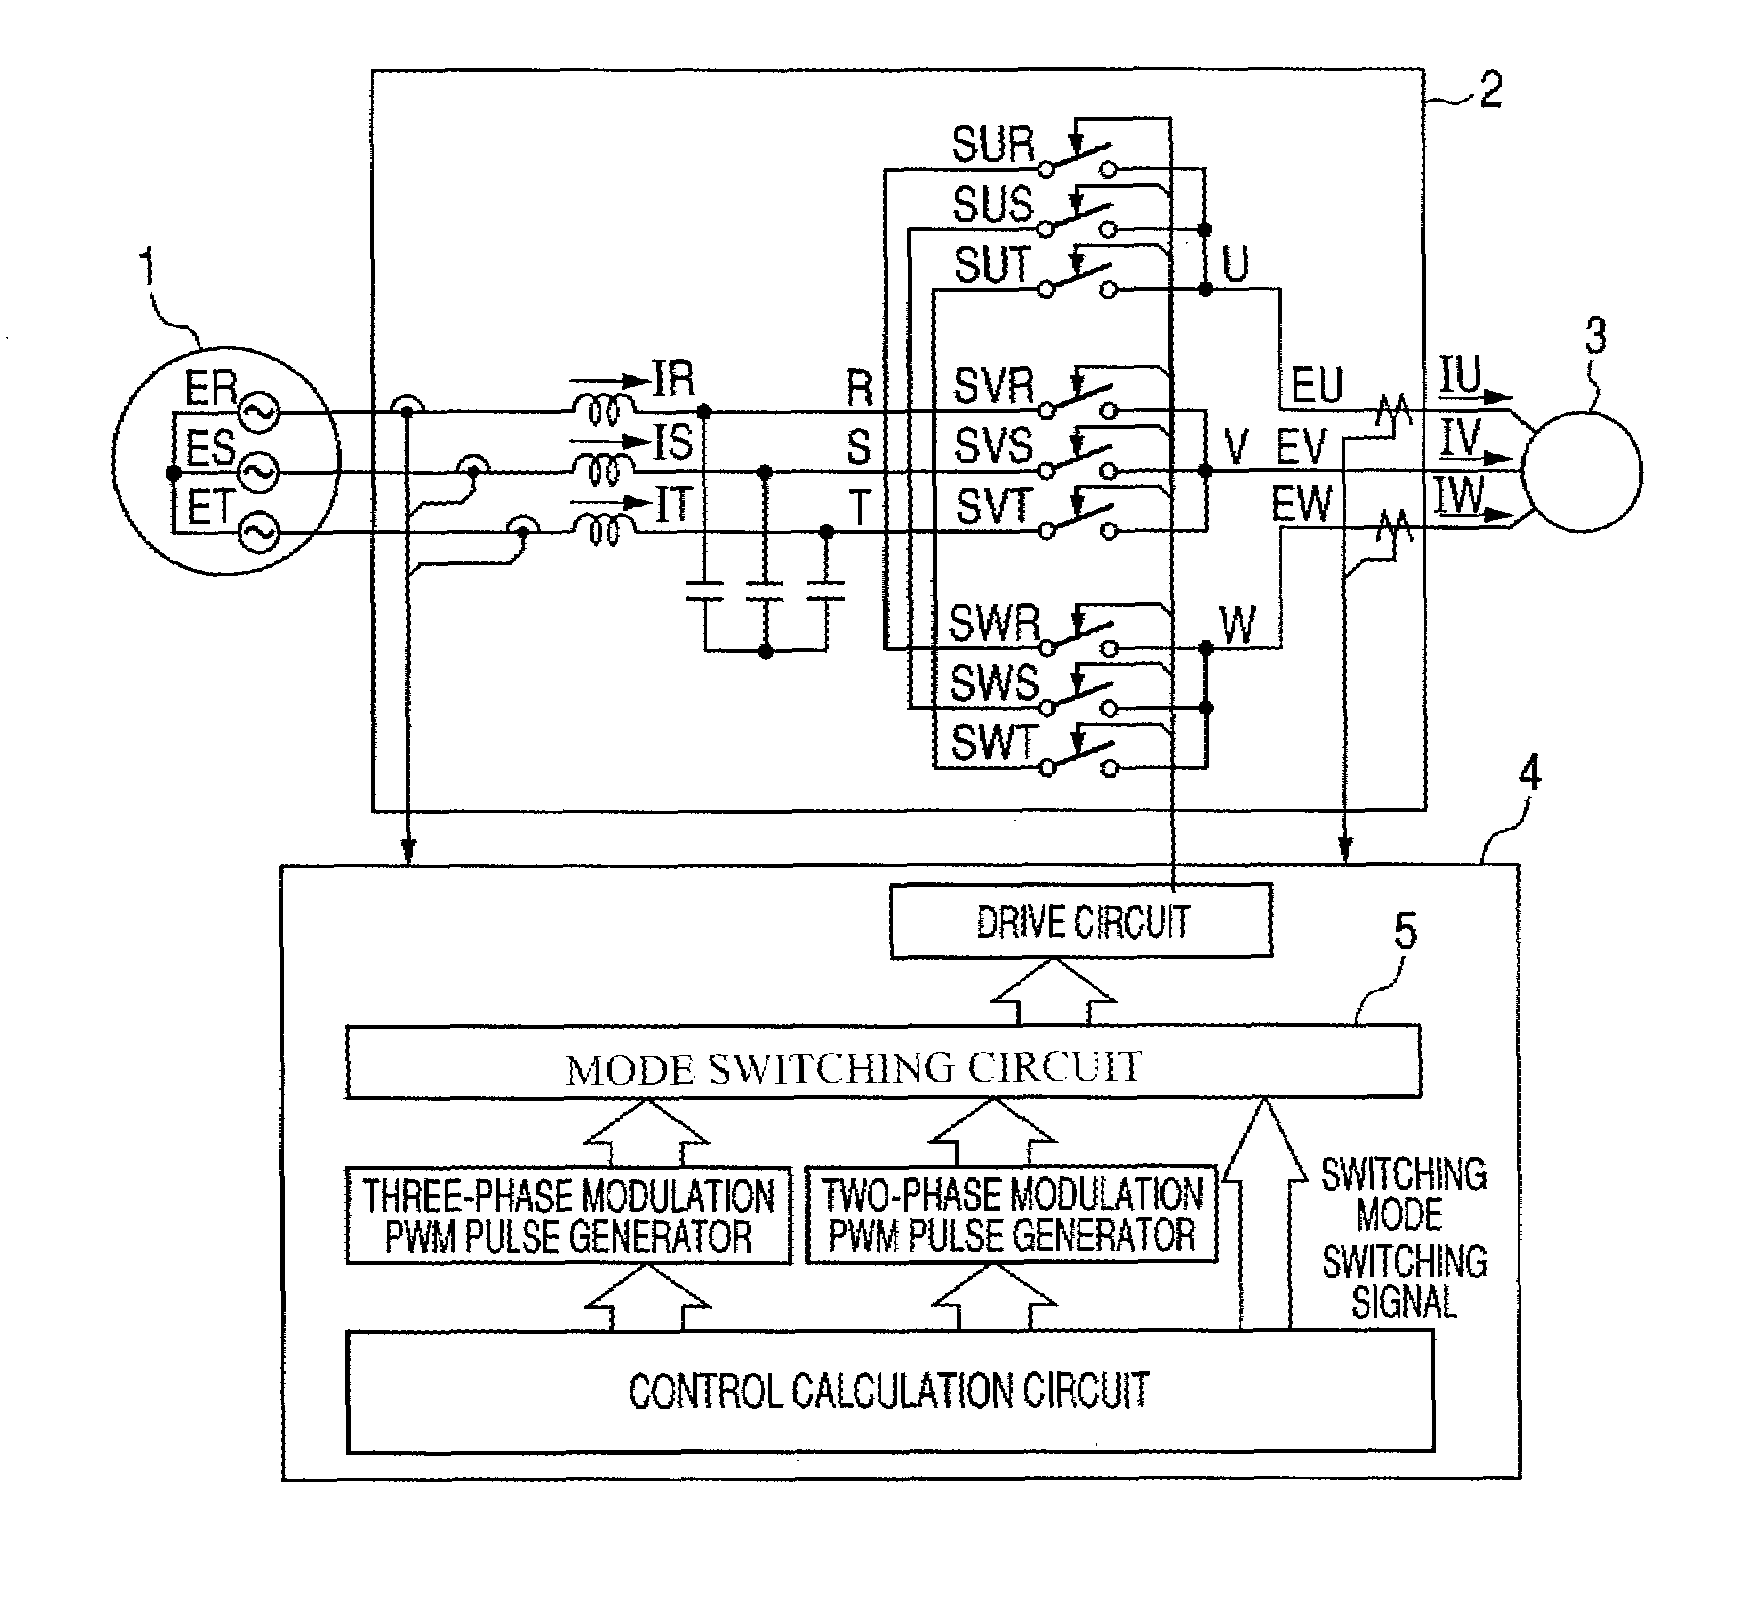 Apparatus for three phase PWM cycloconverter